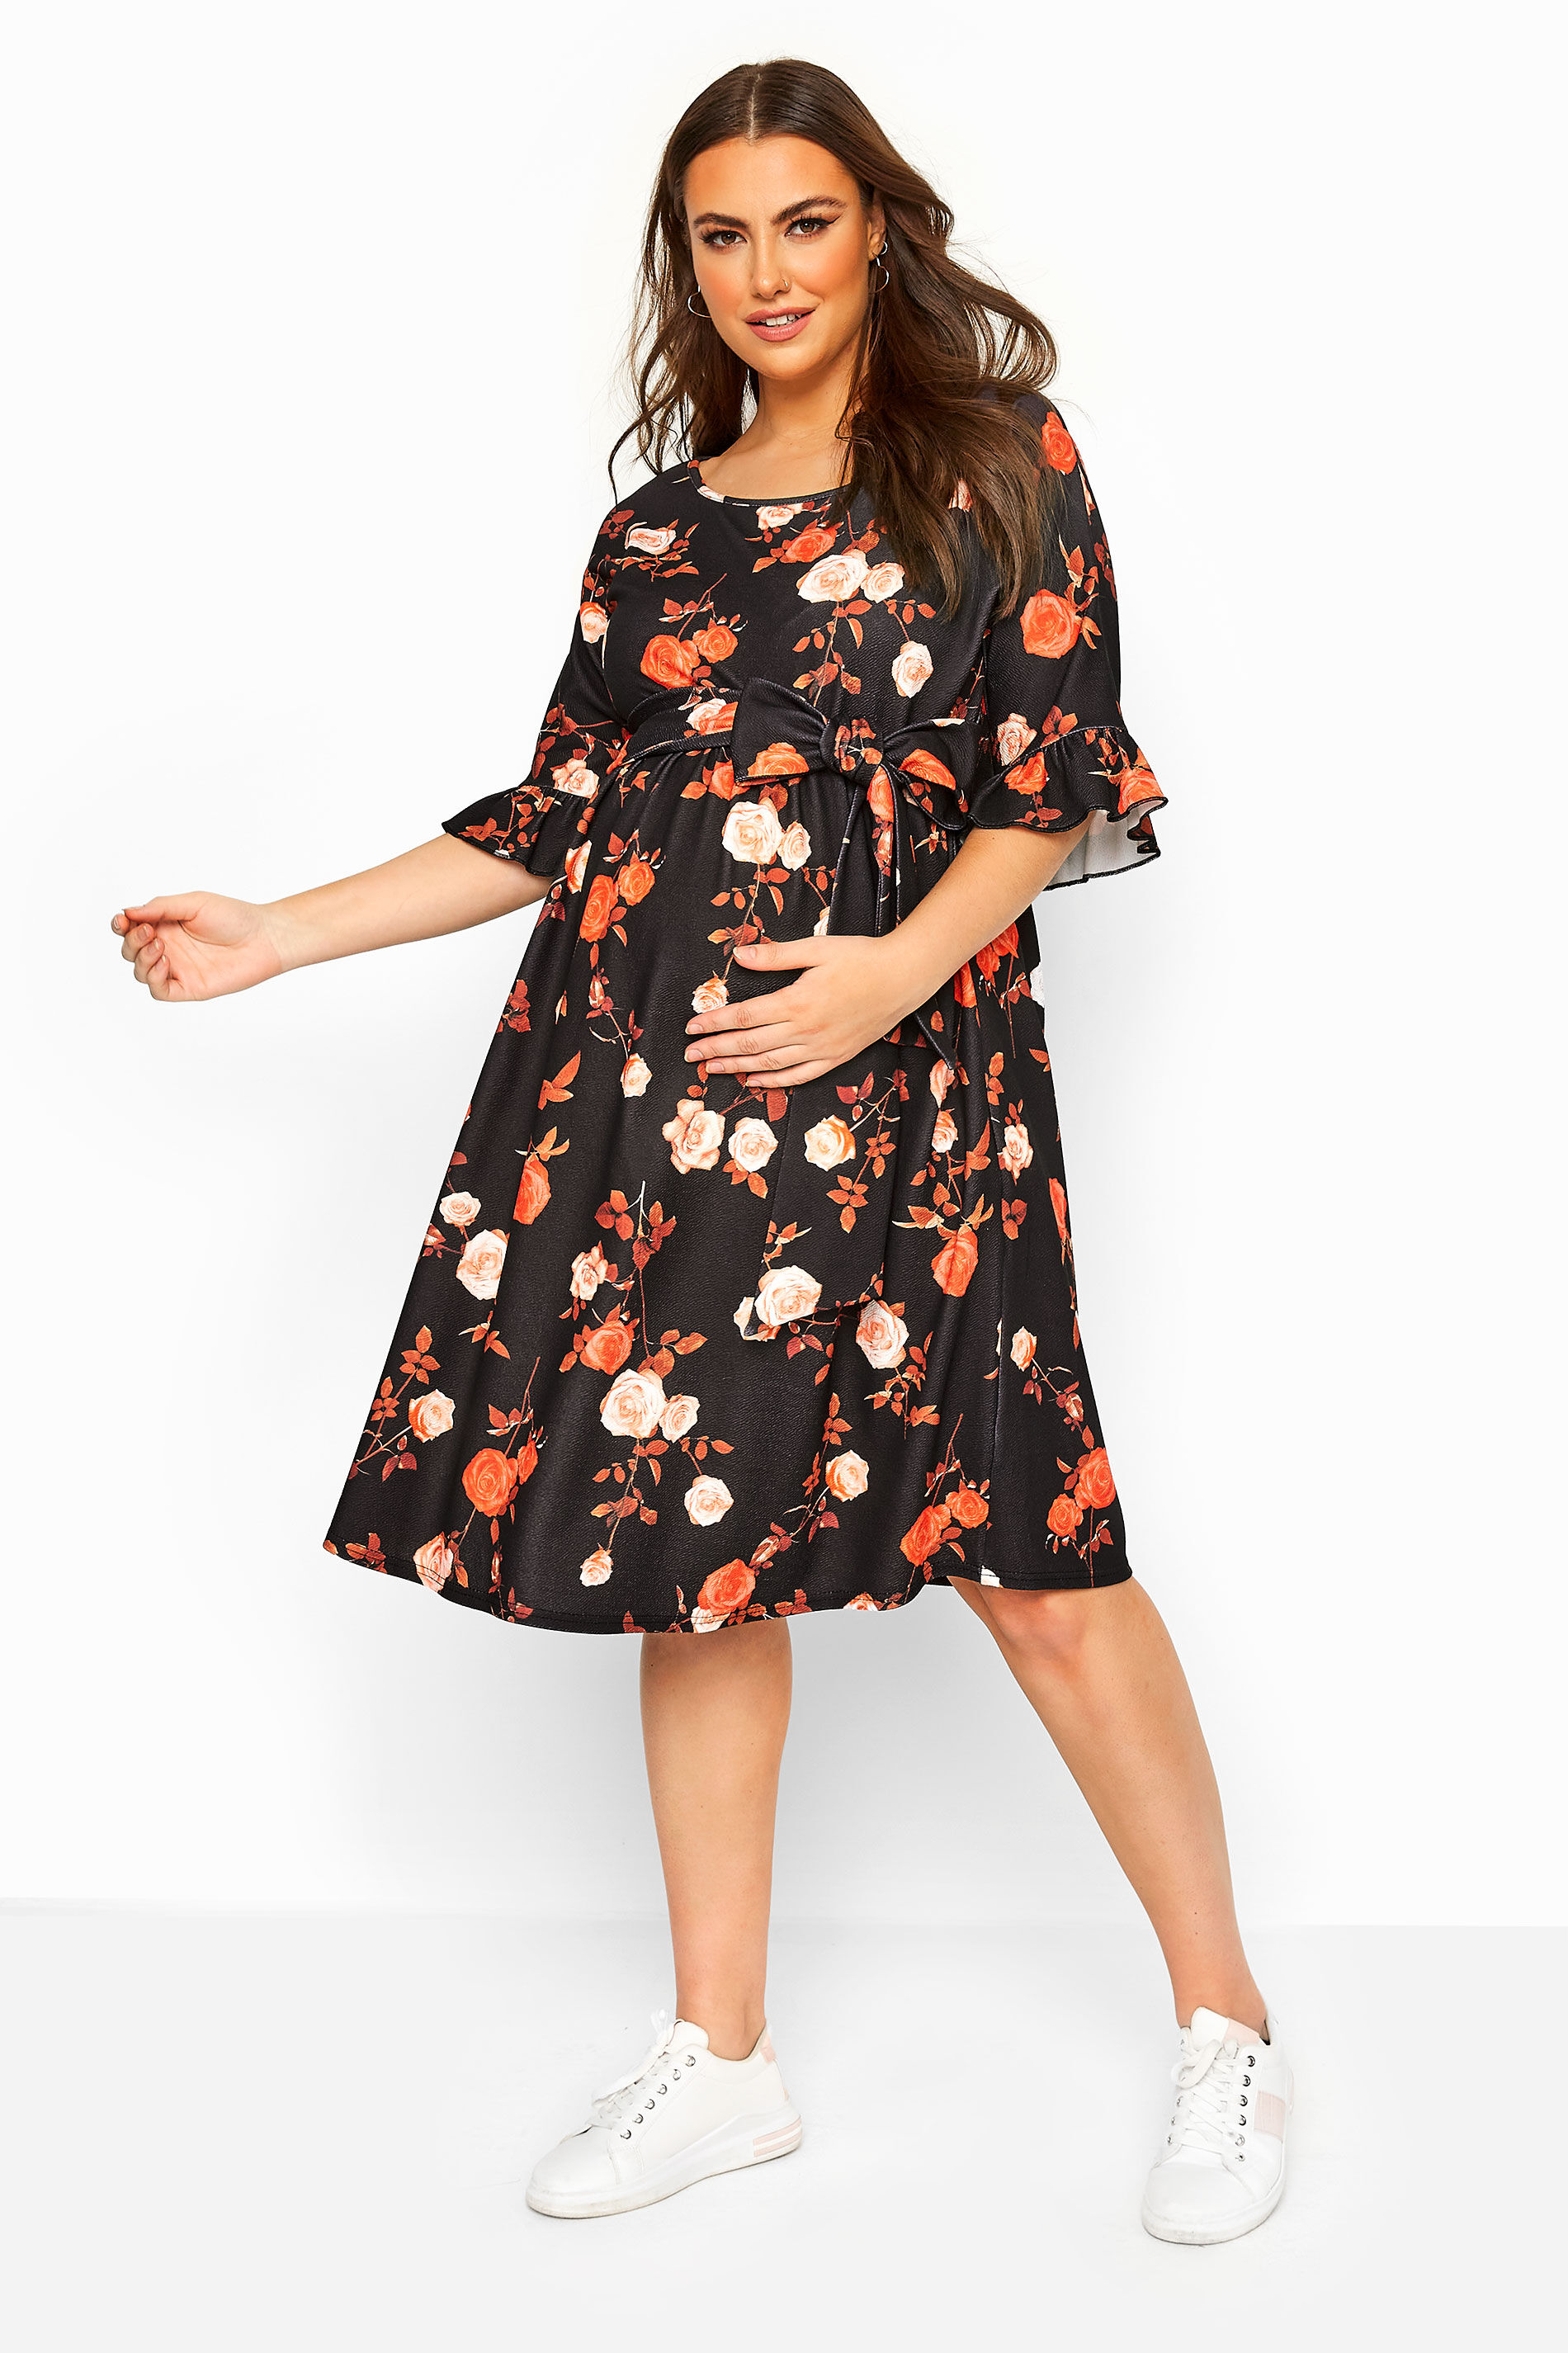 Yours Clothing Bump it up maternity black & orange floral ruffle sleeve dress